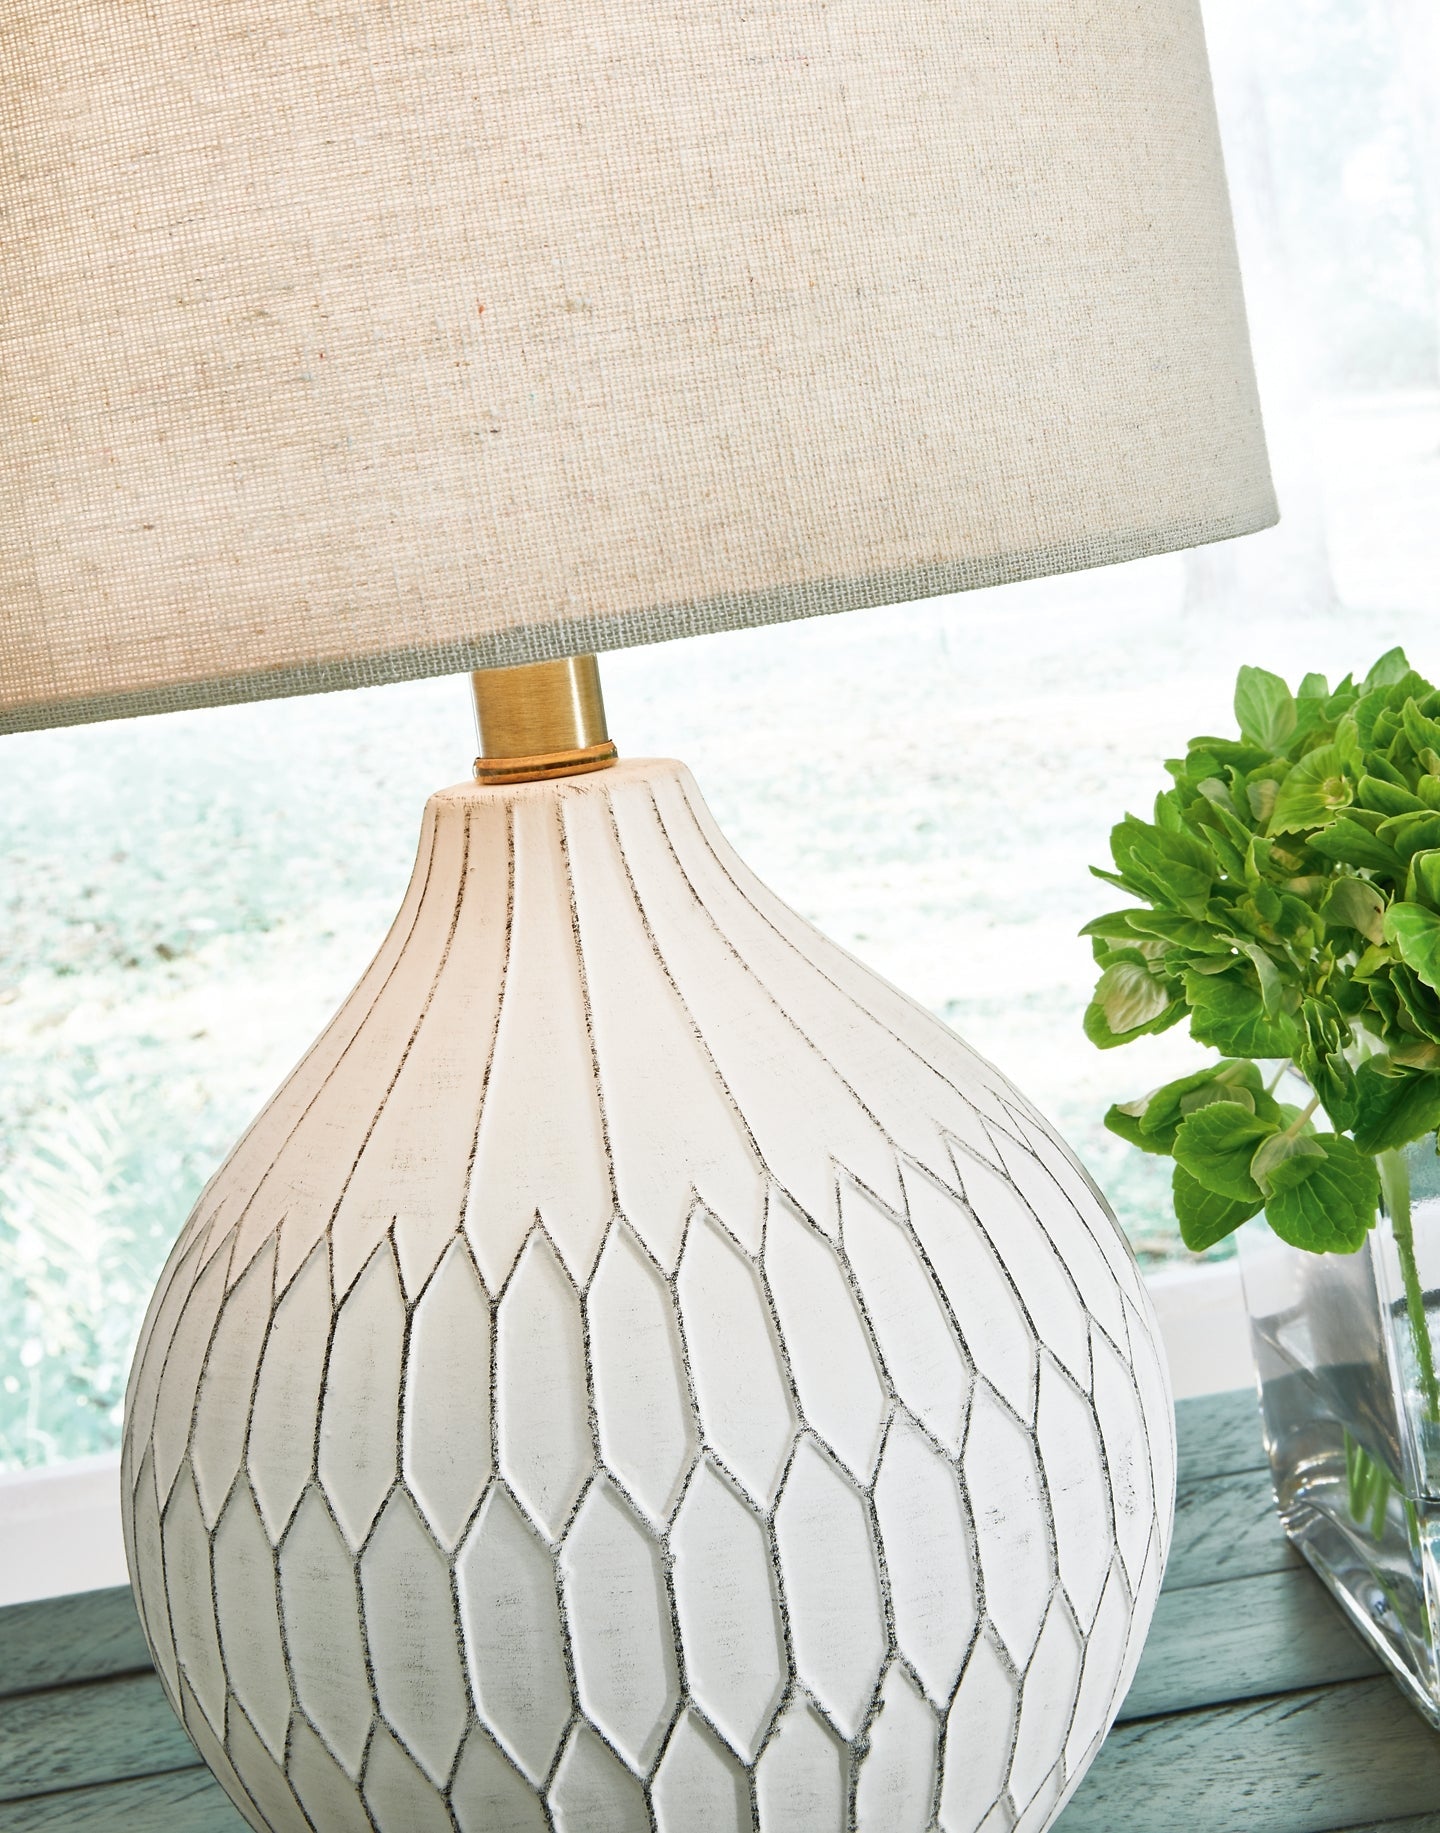 Wardmont Ceramic Table Lamp